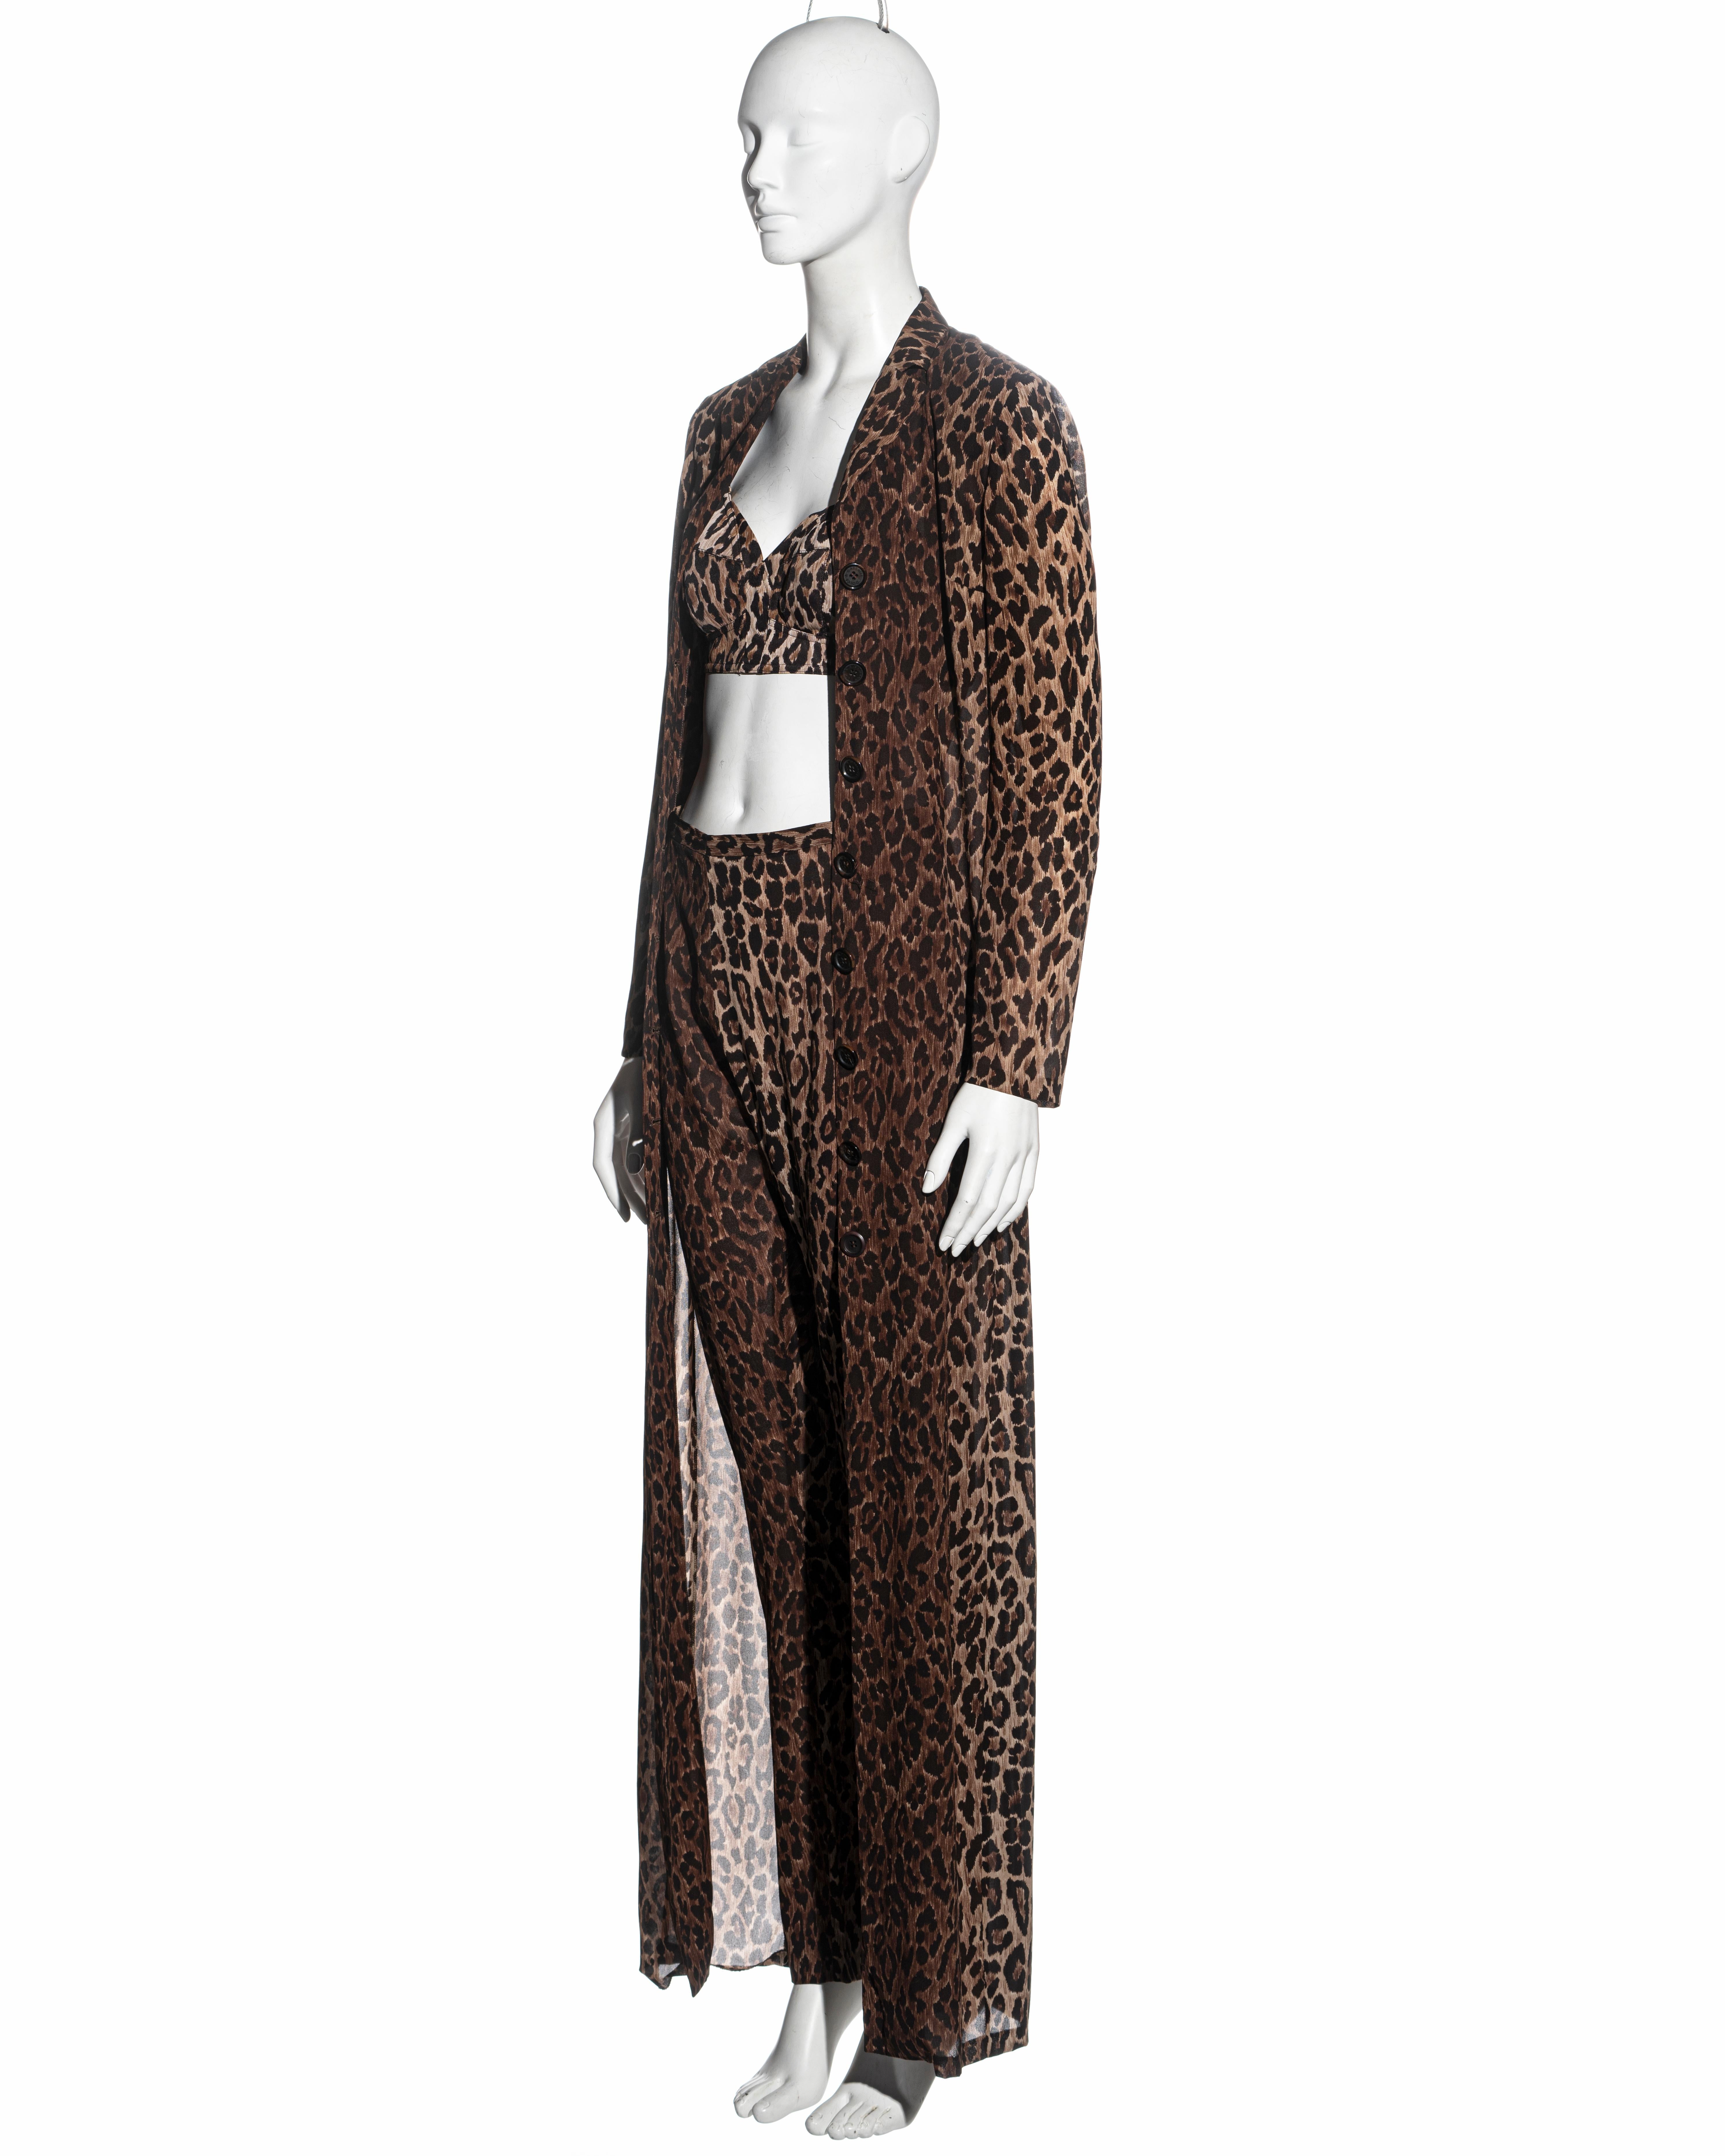 Dolce & Gabbana leopard print silk coat, pants and bra ensemble, ss 1997 For Sale 4